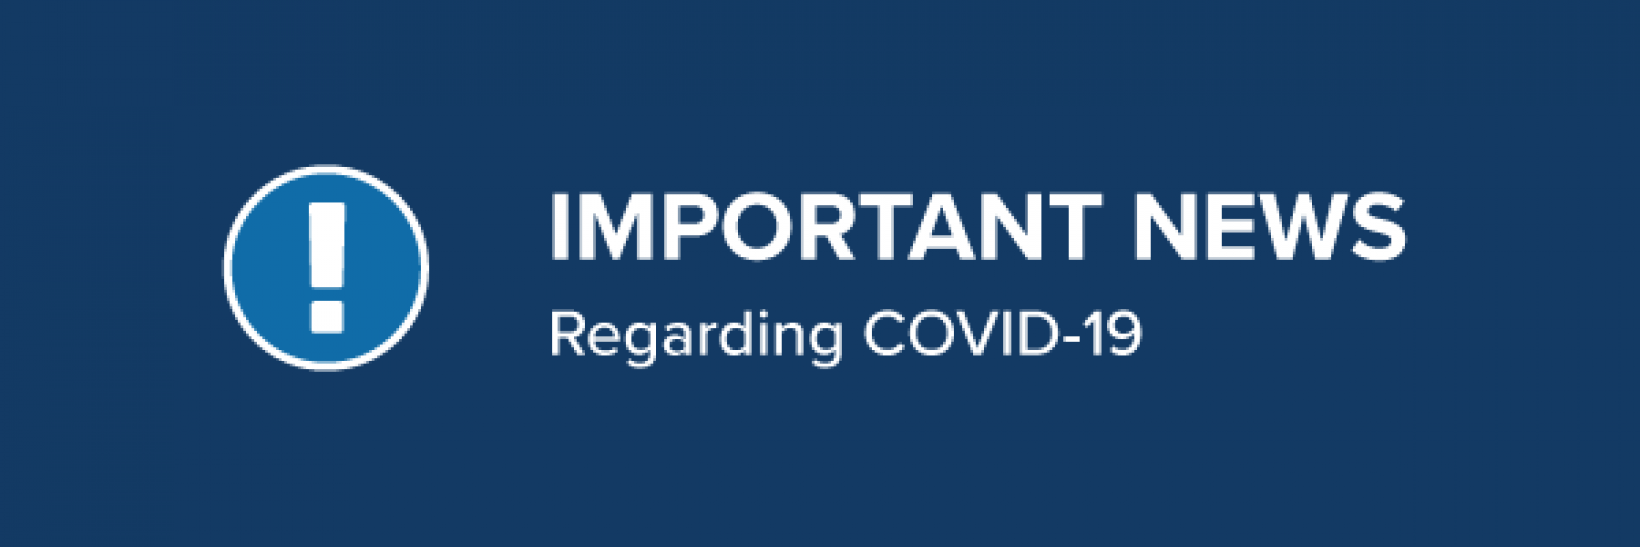 Important news regarding COVID-19